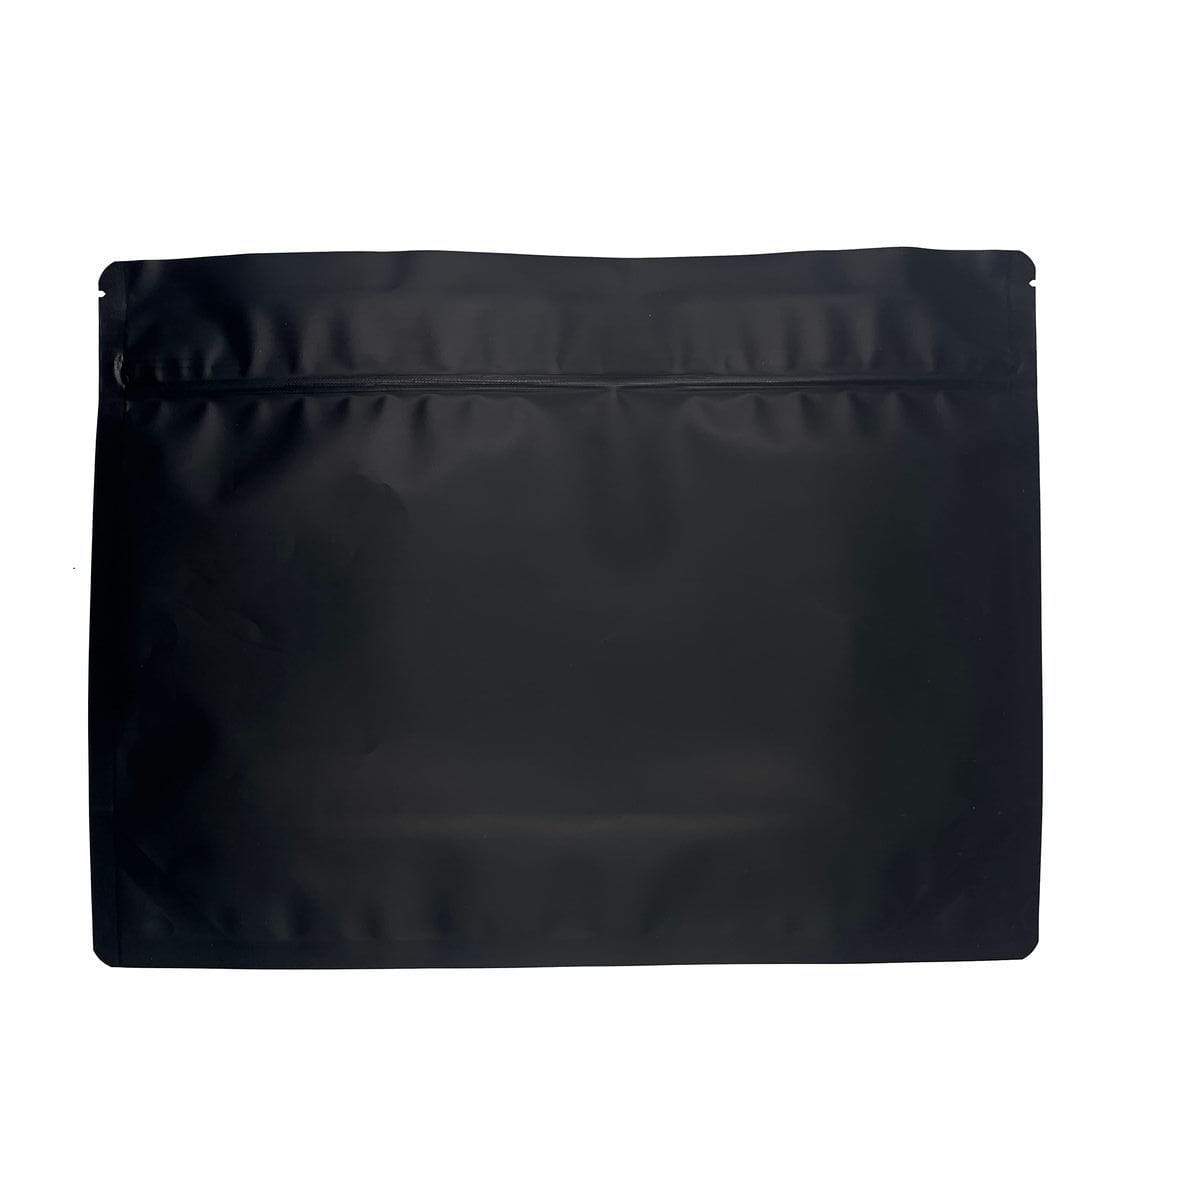 Bag King Large Child-Resistant Opaque Exit Bag (1/2 lb) 9.0